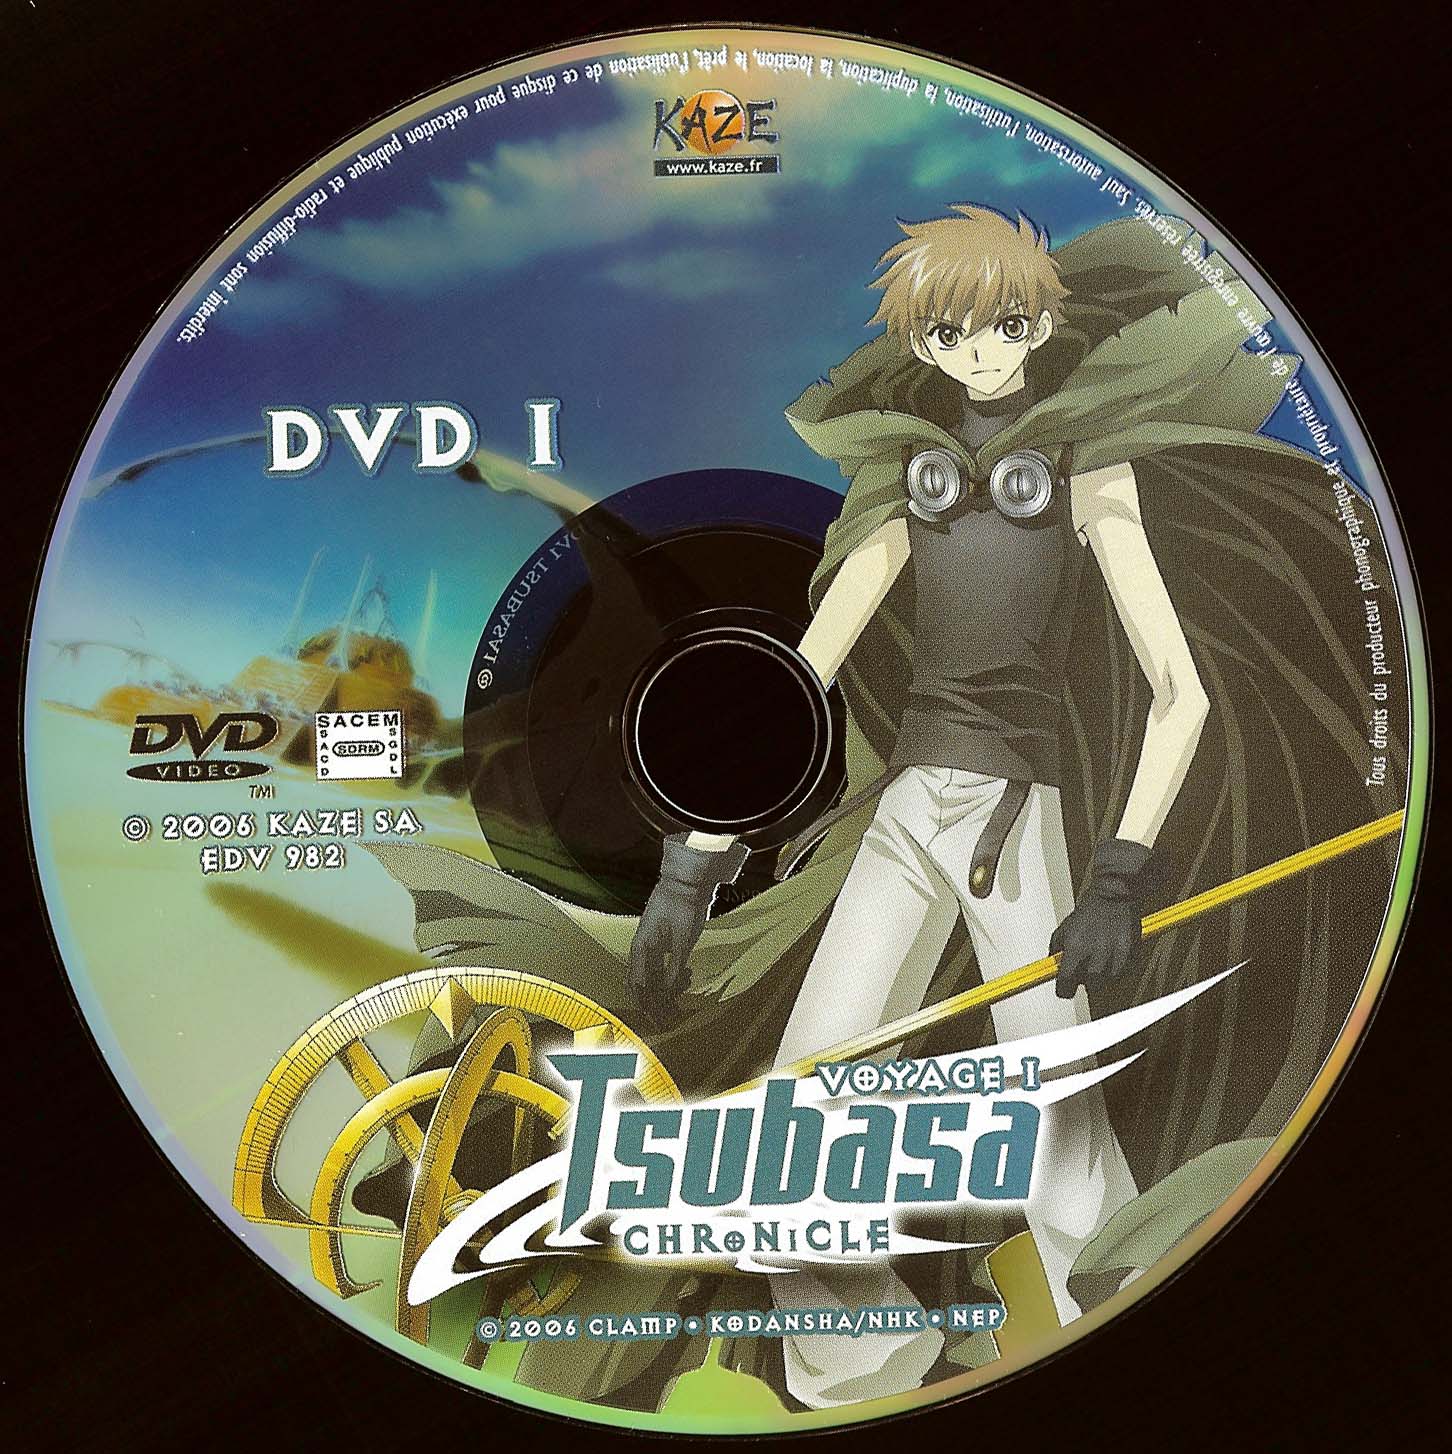 Tsubasa chronicle - voyage 1 - DVD 1